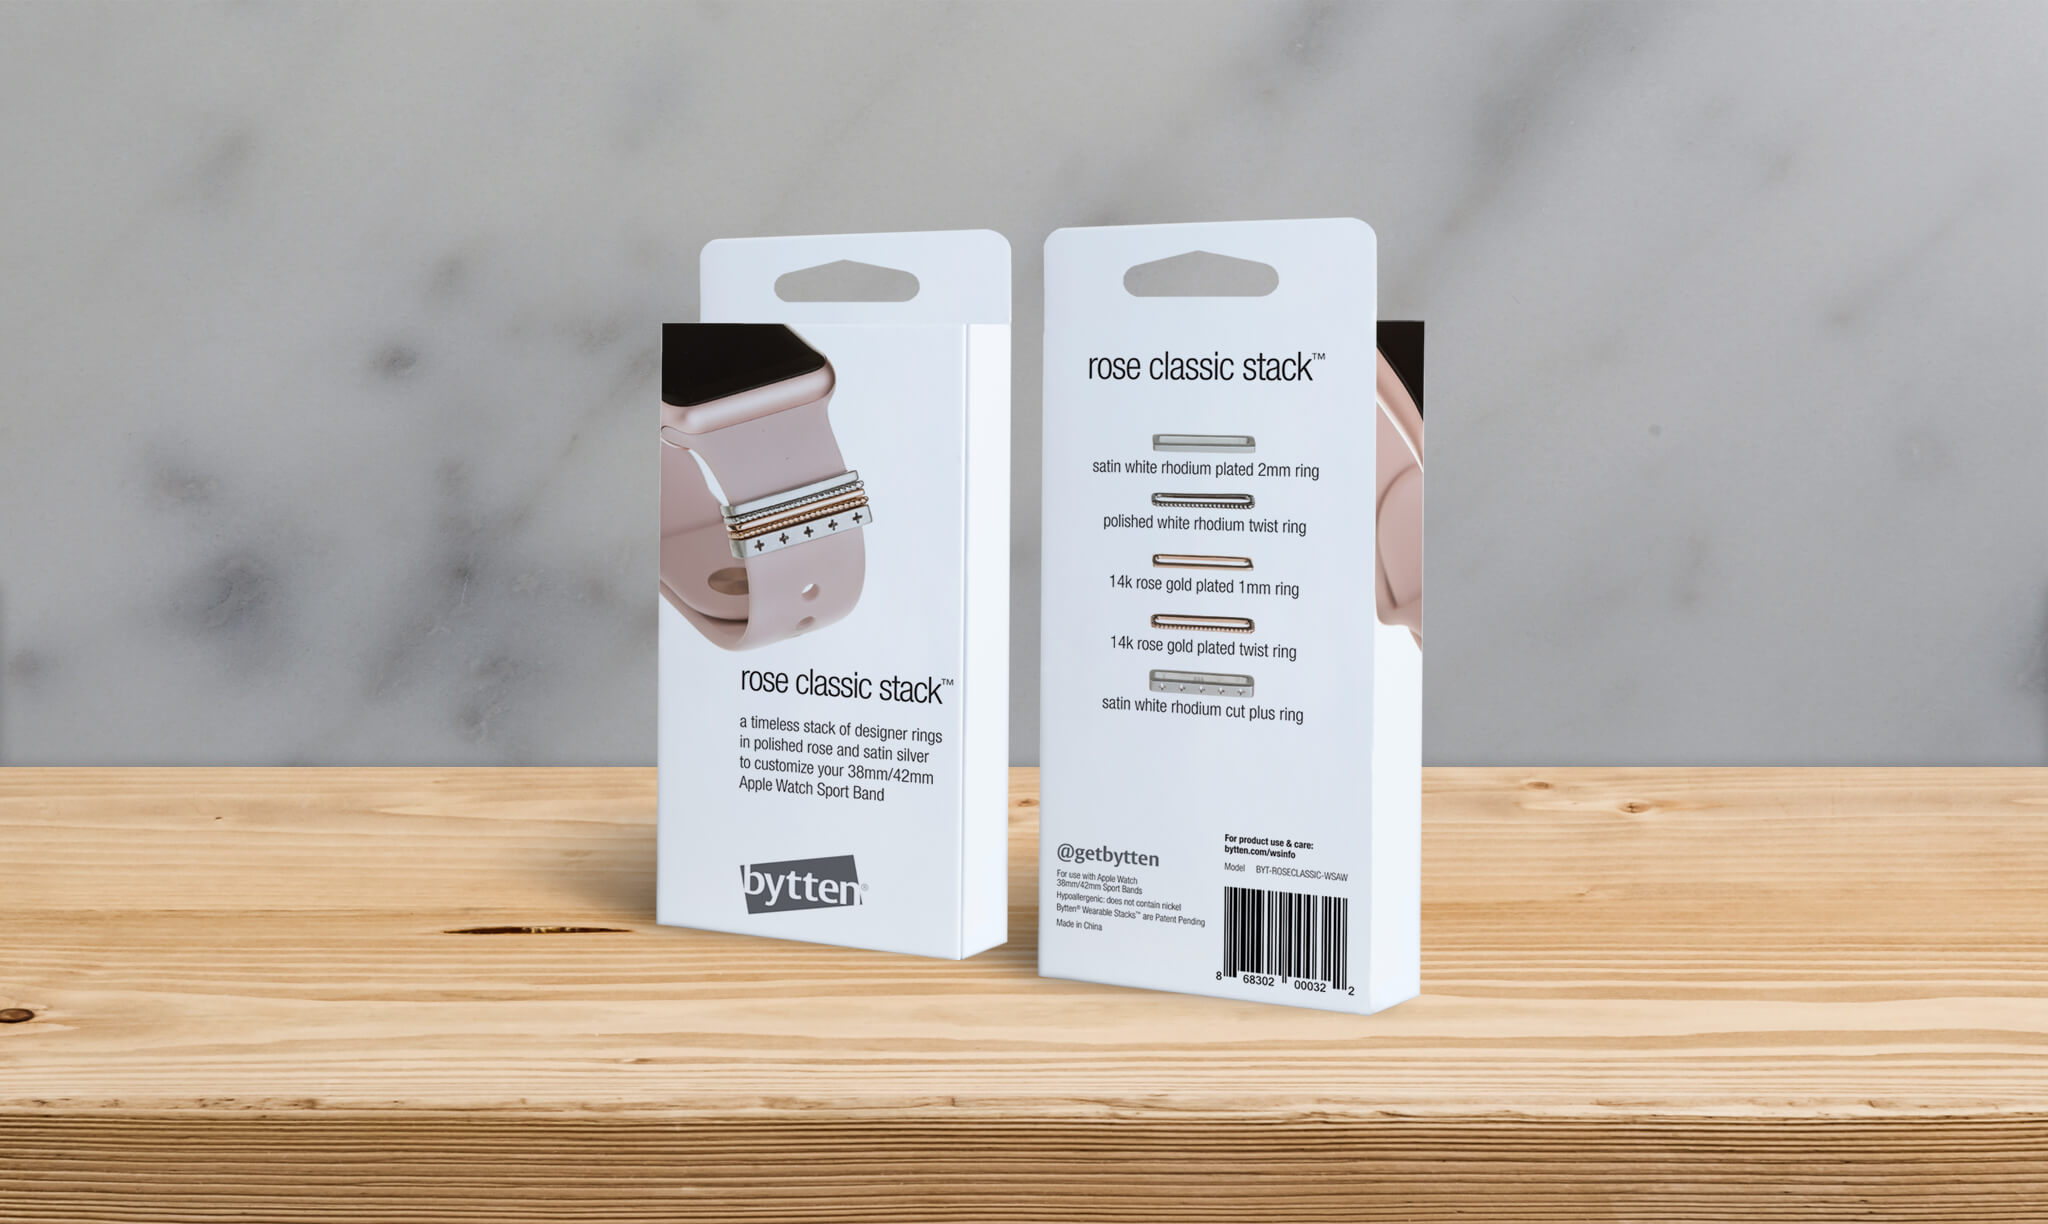 Bytten Apple Watch Band Packaging